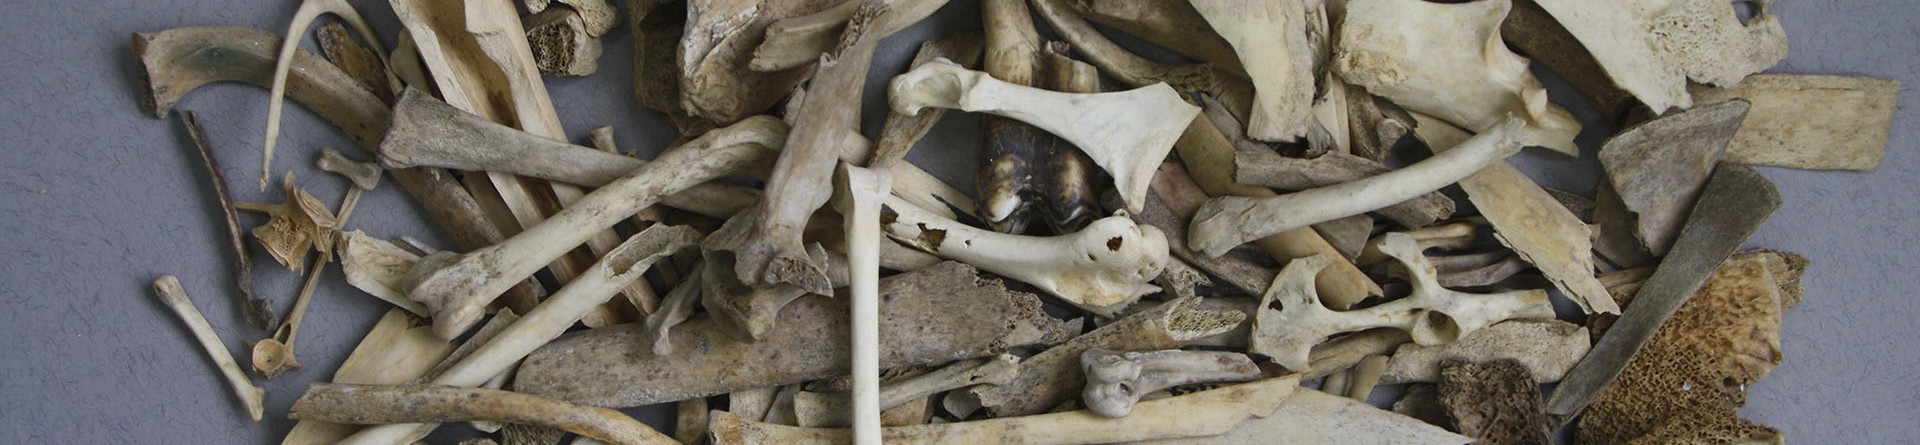 photograph of archaeological animal bones